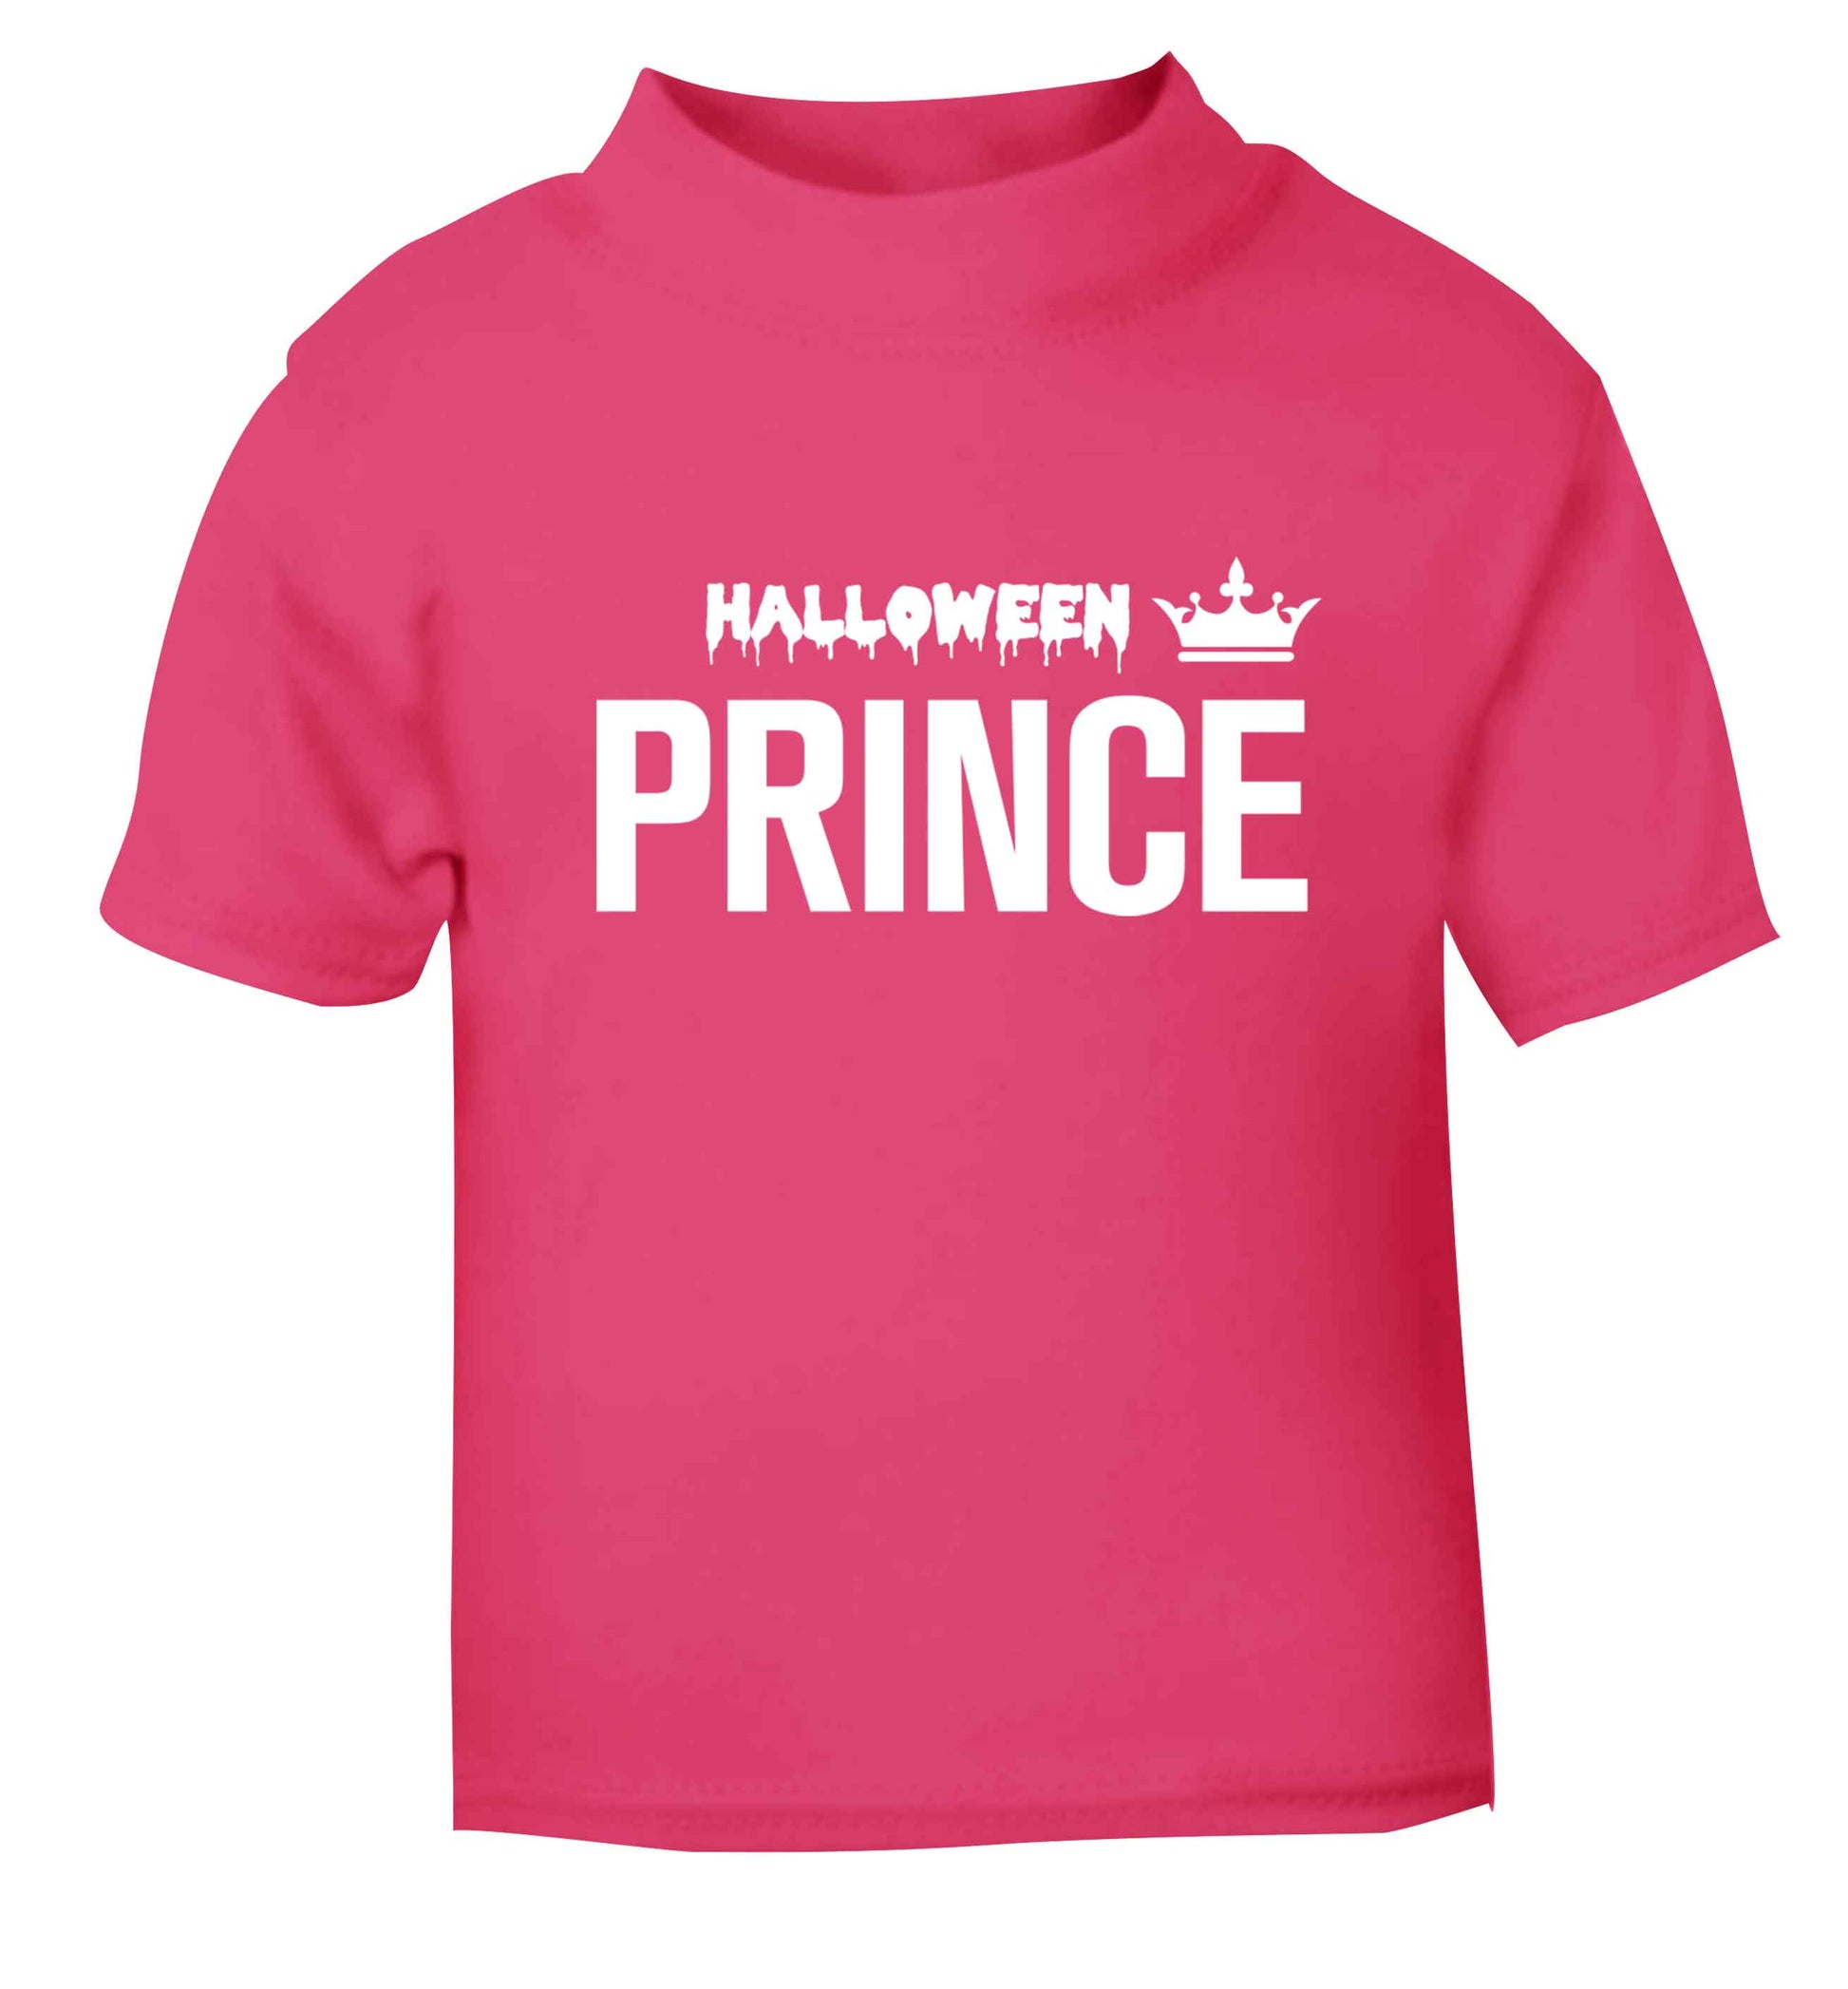 Halloween prince pink baby toddler Tshirt 2 Years